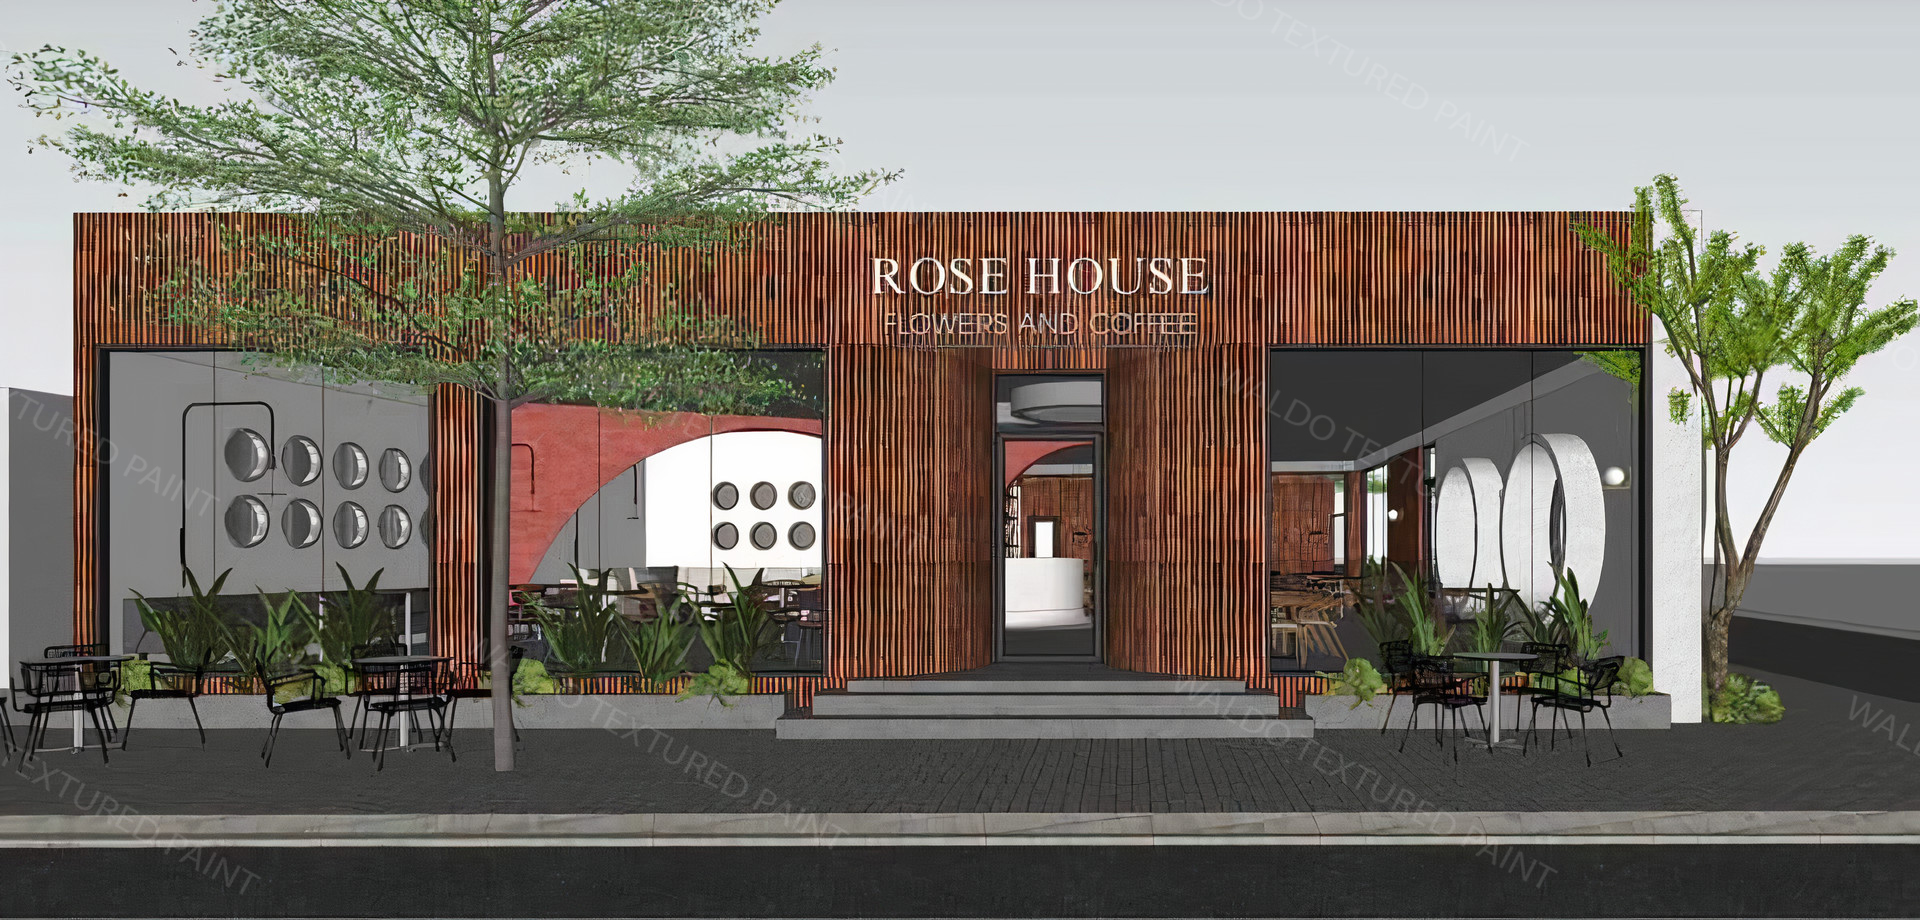 CỬA HÀNG ROSE HOUSE COFFEE & FLOWER